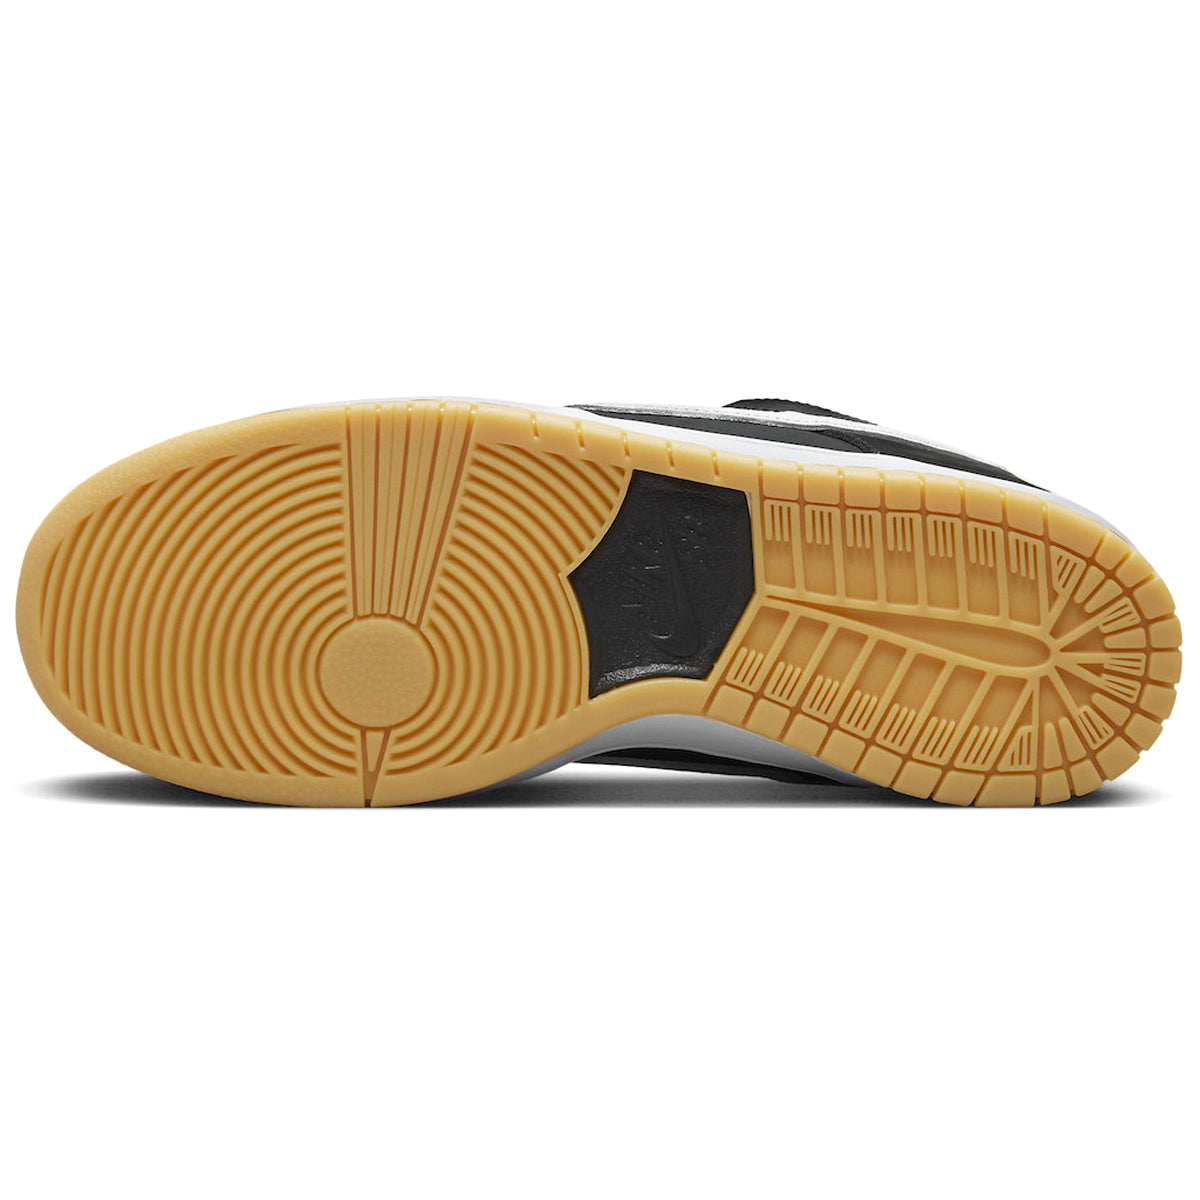 Nike SB Dunk Low Pro Shoes - Black/White/Black/Gum Light Brown image 3